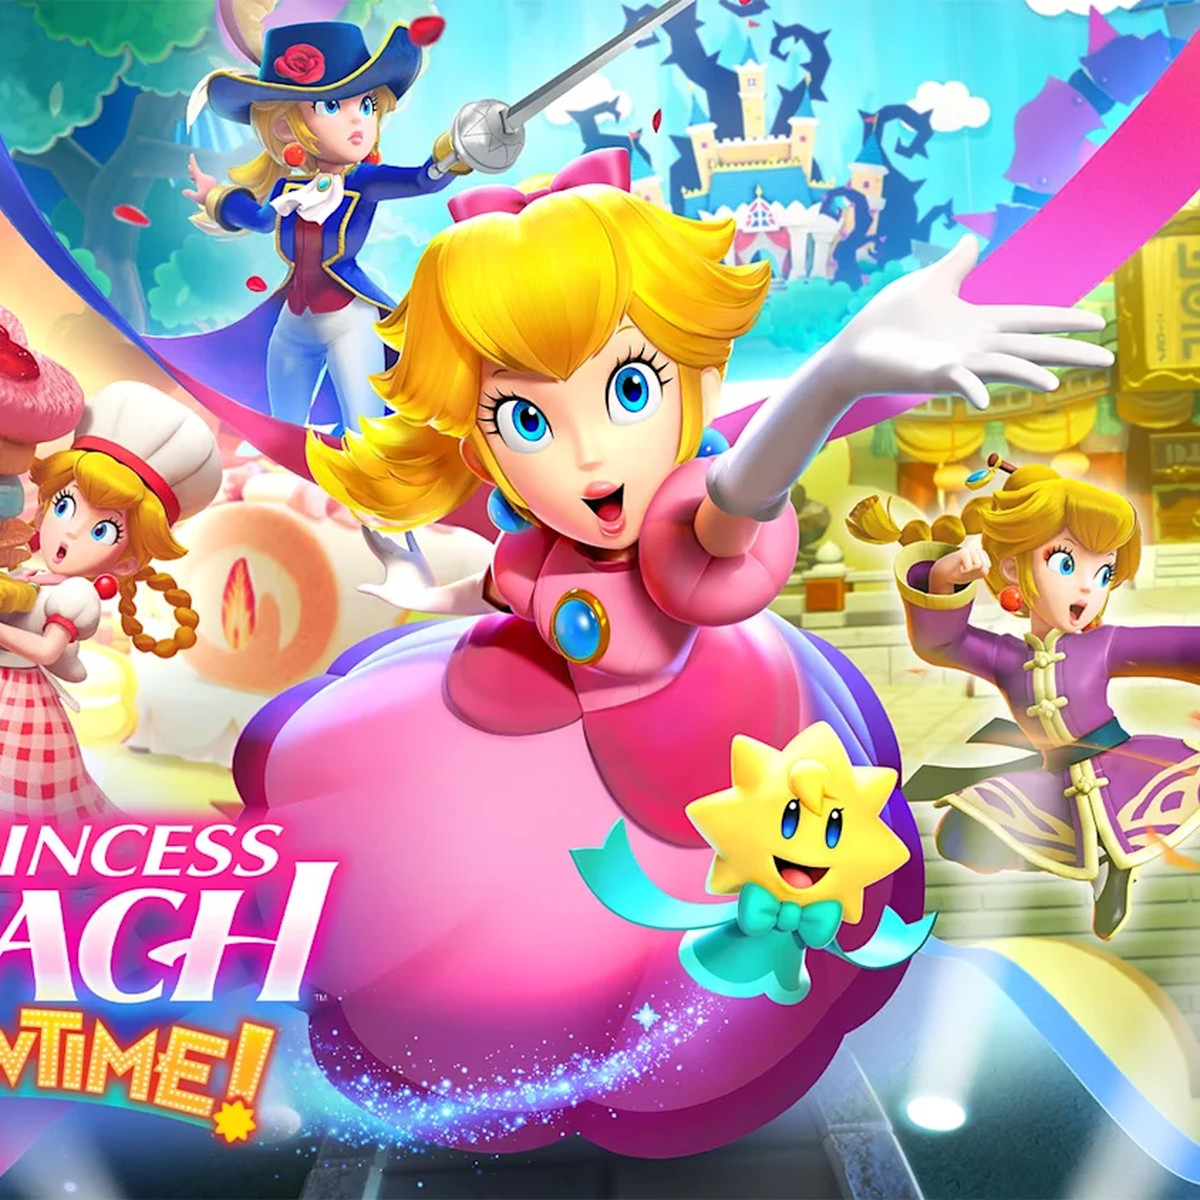 Princess Peach Showtime! is already on sale!